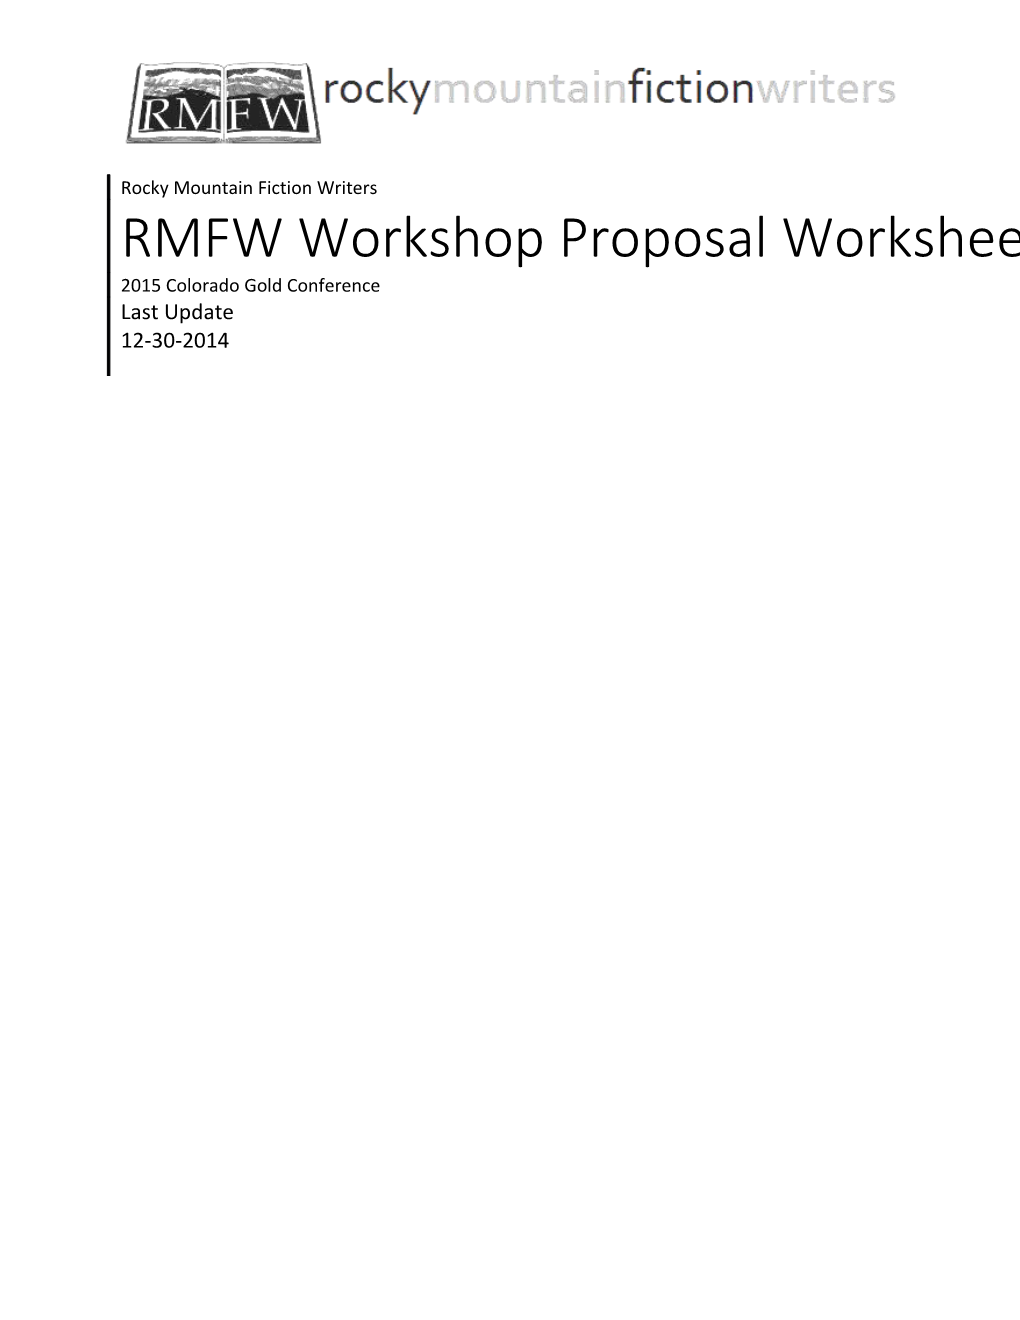 RMFW Workshop Proposal Worksheet